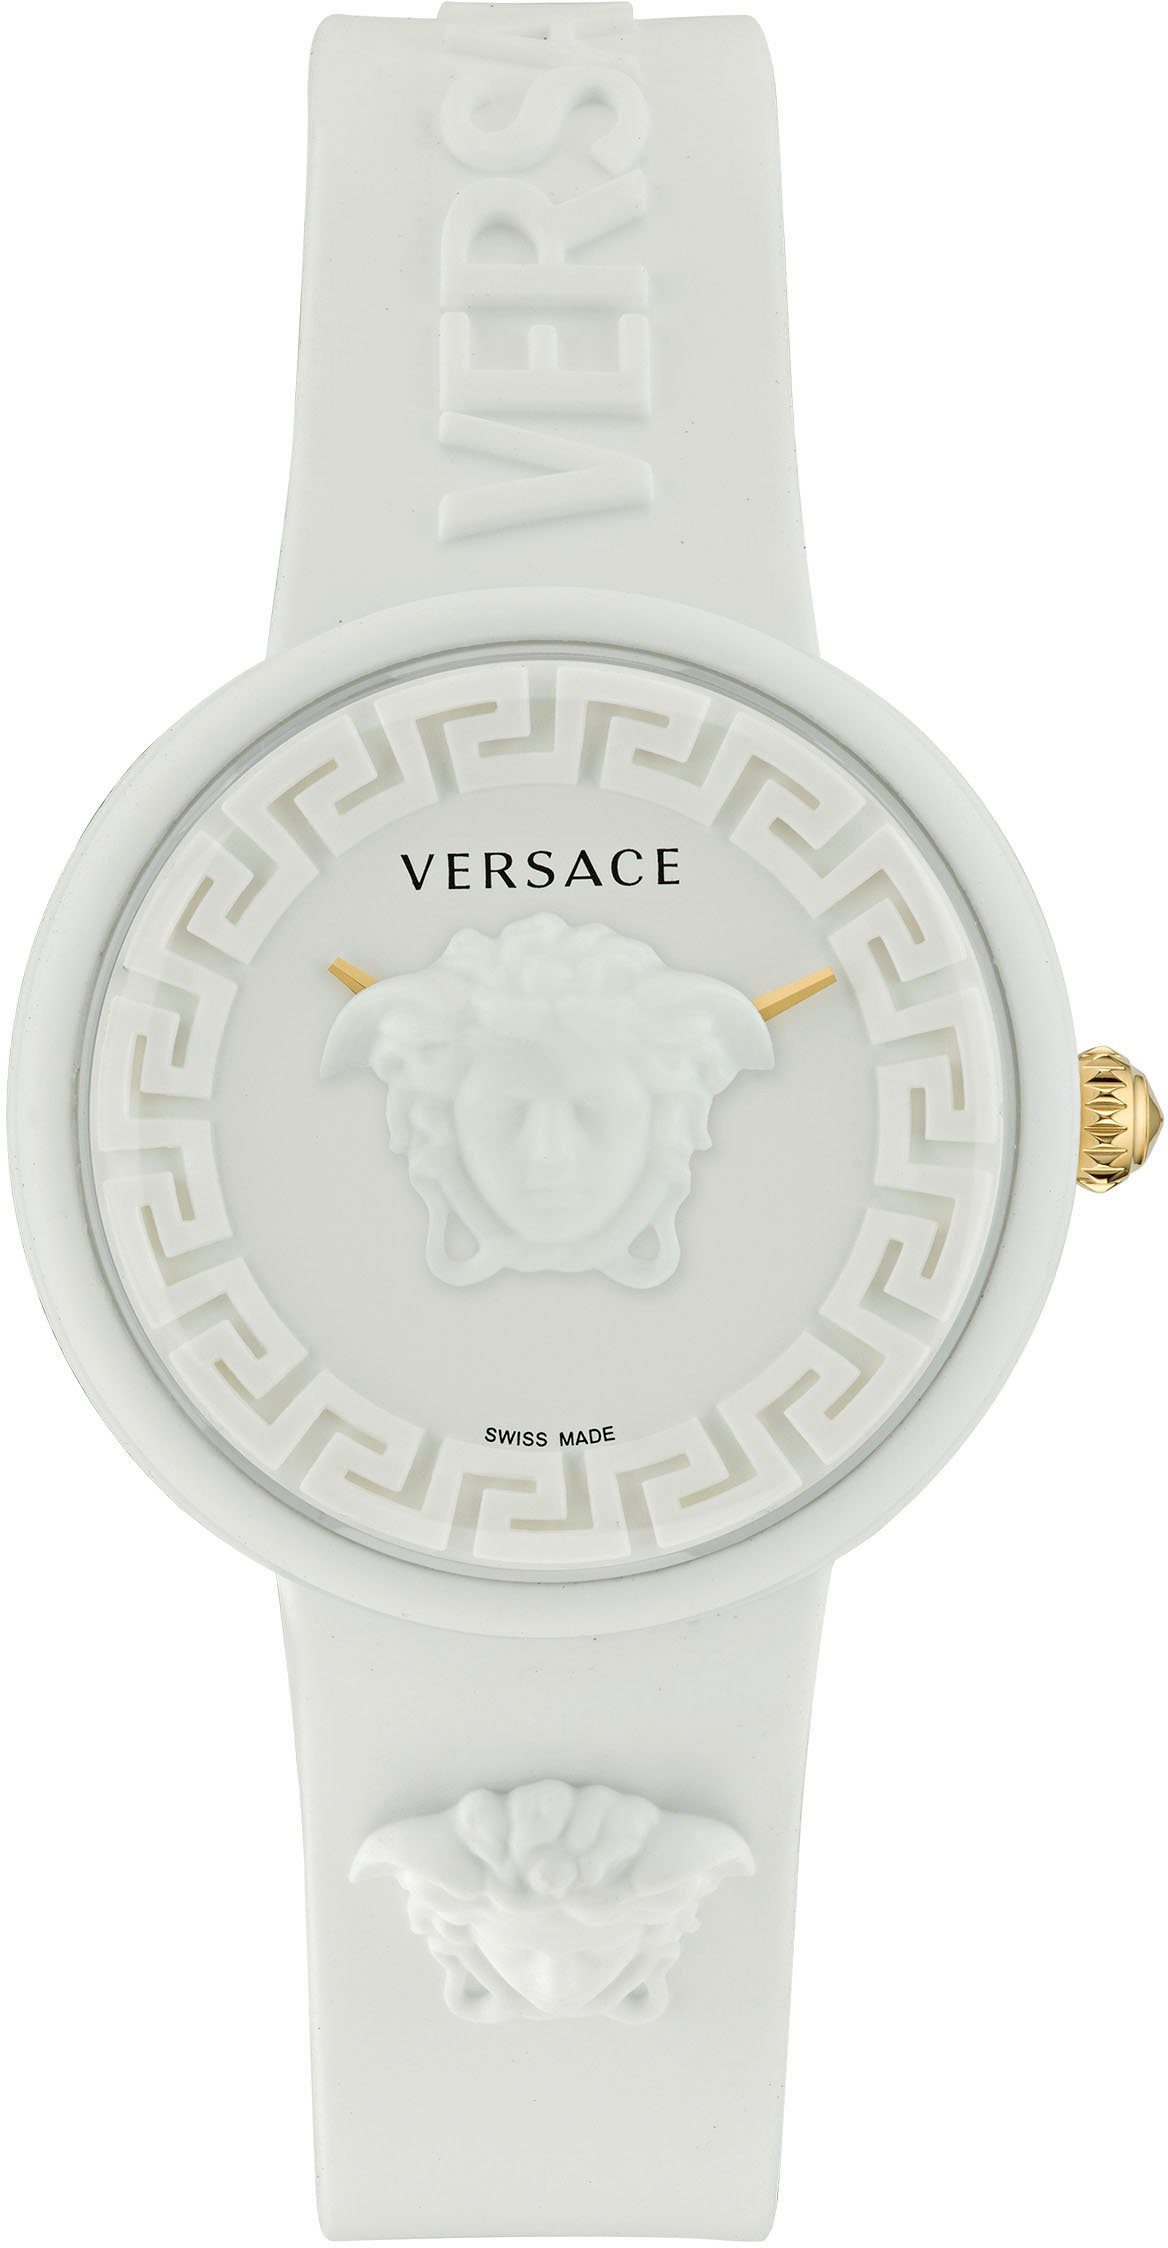 Versace Quarzuhr MEDUSA POP, VE6G00123, Armbanduhr, Damenuhr, Saphirglas, Swiss Made